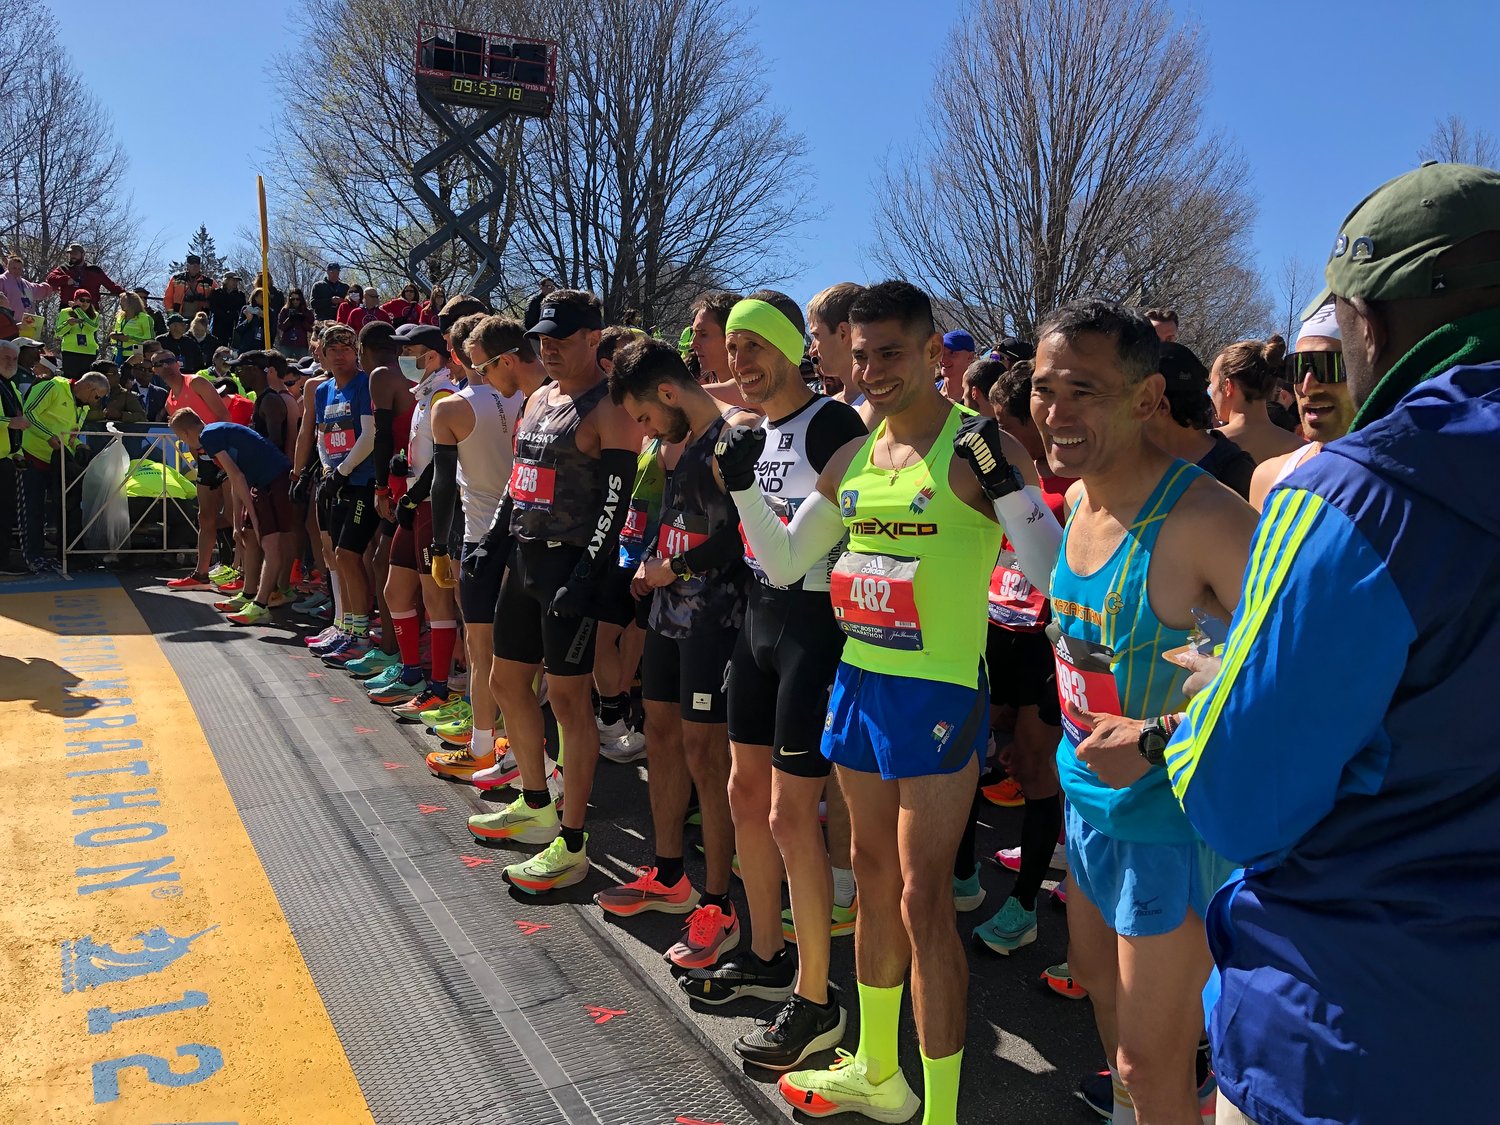 SCENES FROM THE STARTING LINE: Islander Barry Rector was a ham-radio volunteer at Monday's Boston Marathon.